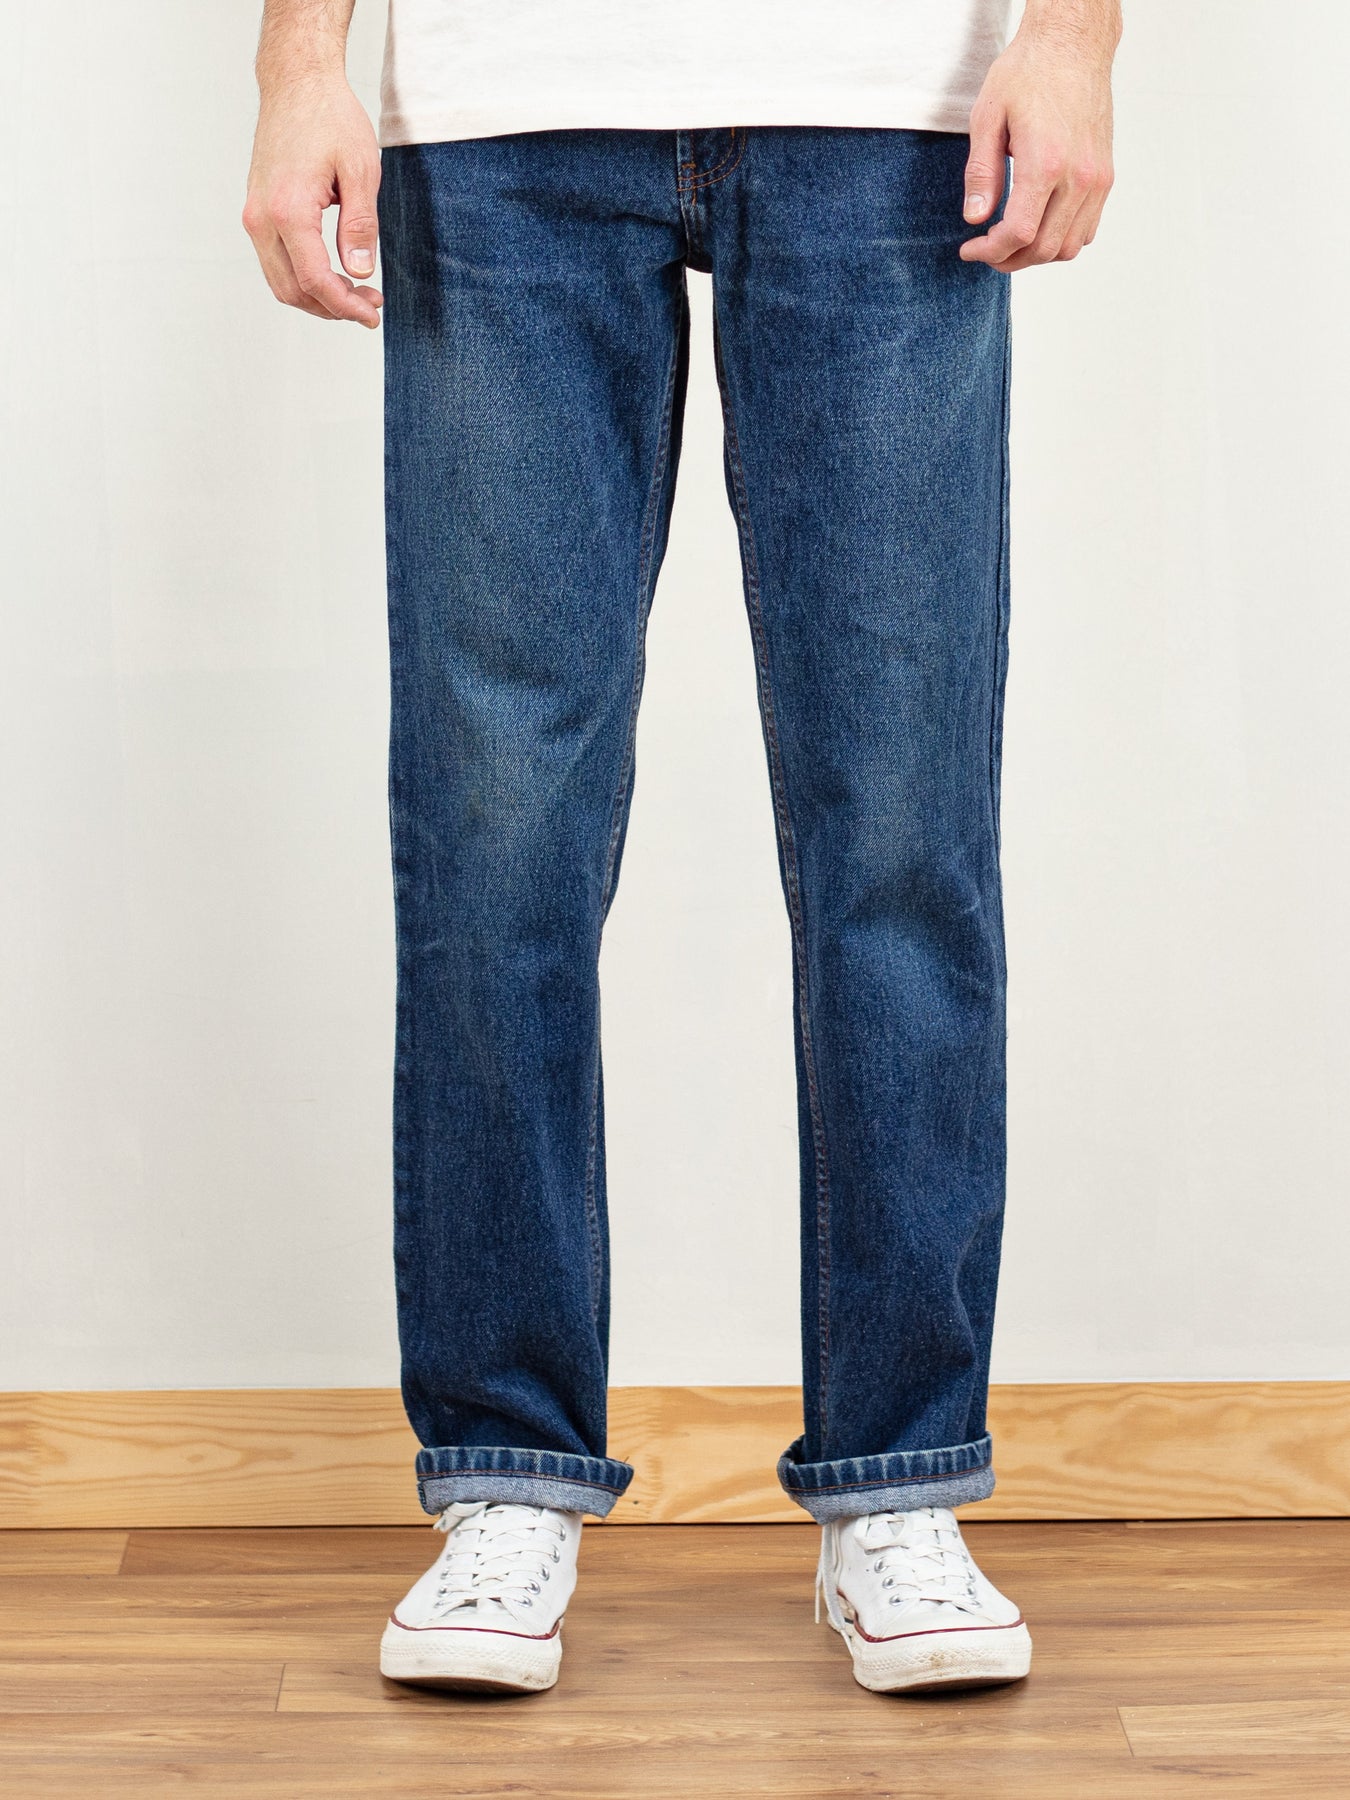 Buy Blue Jeans for Men by RJ Denim Online | Ajio.com